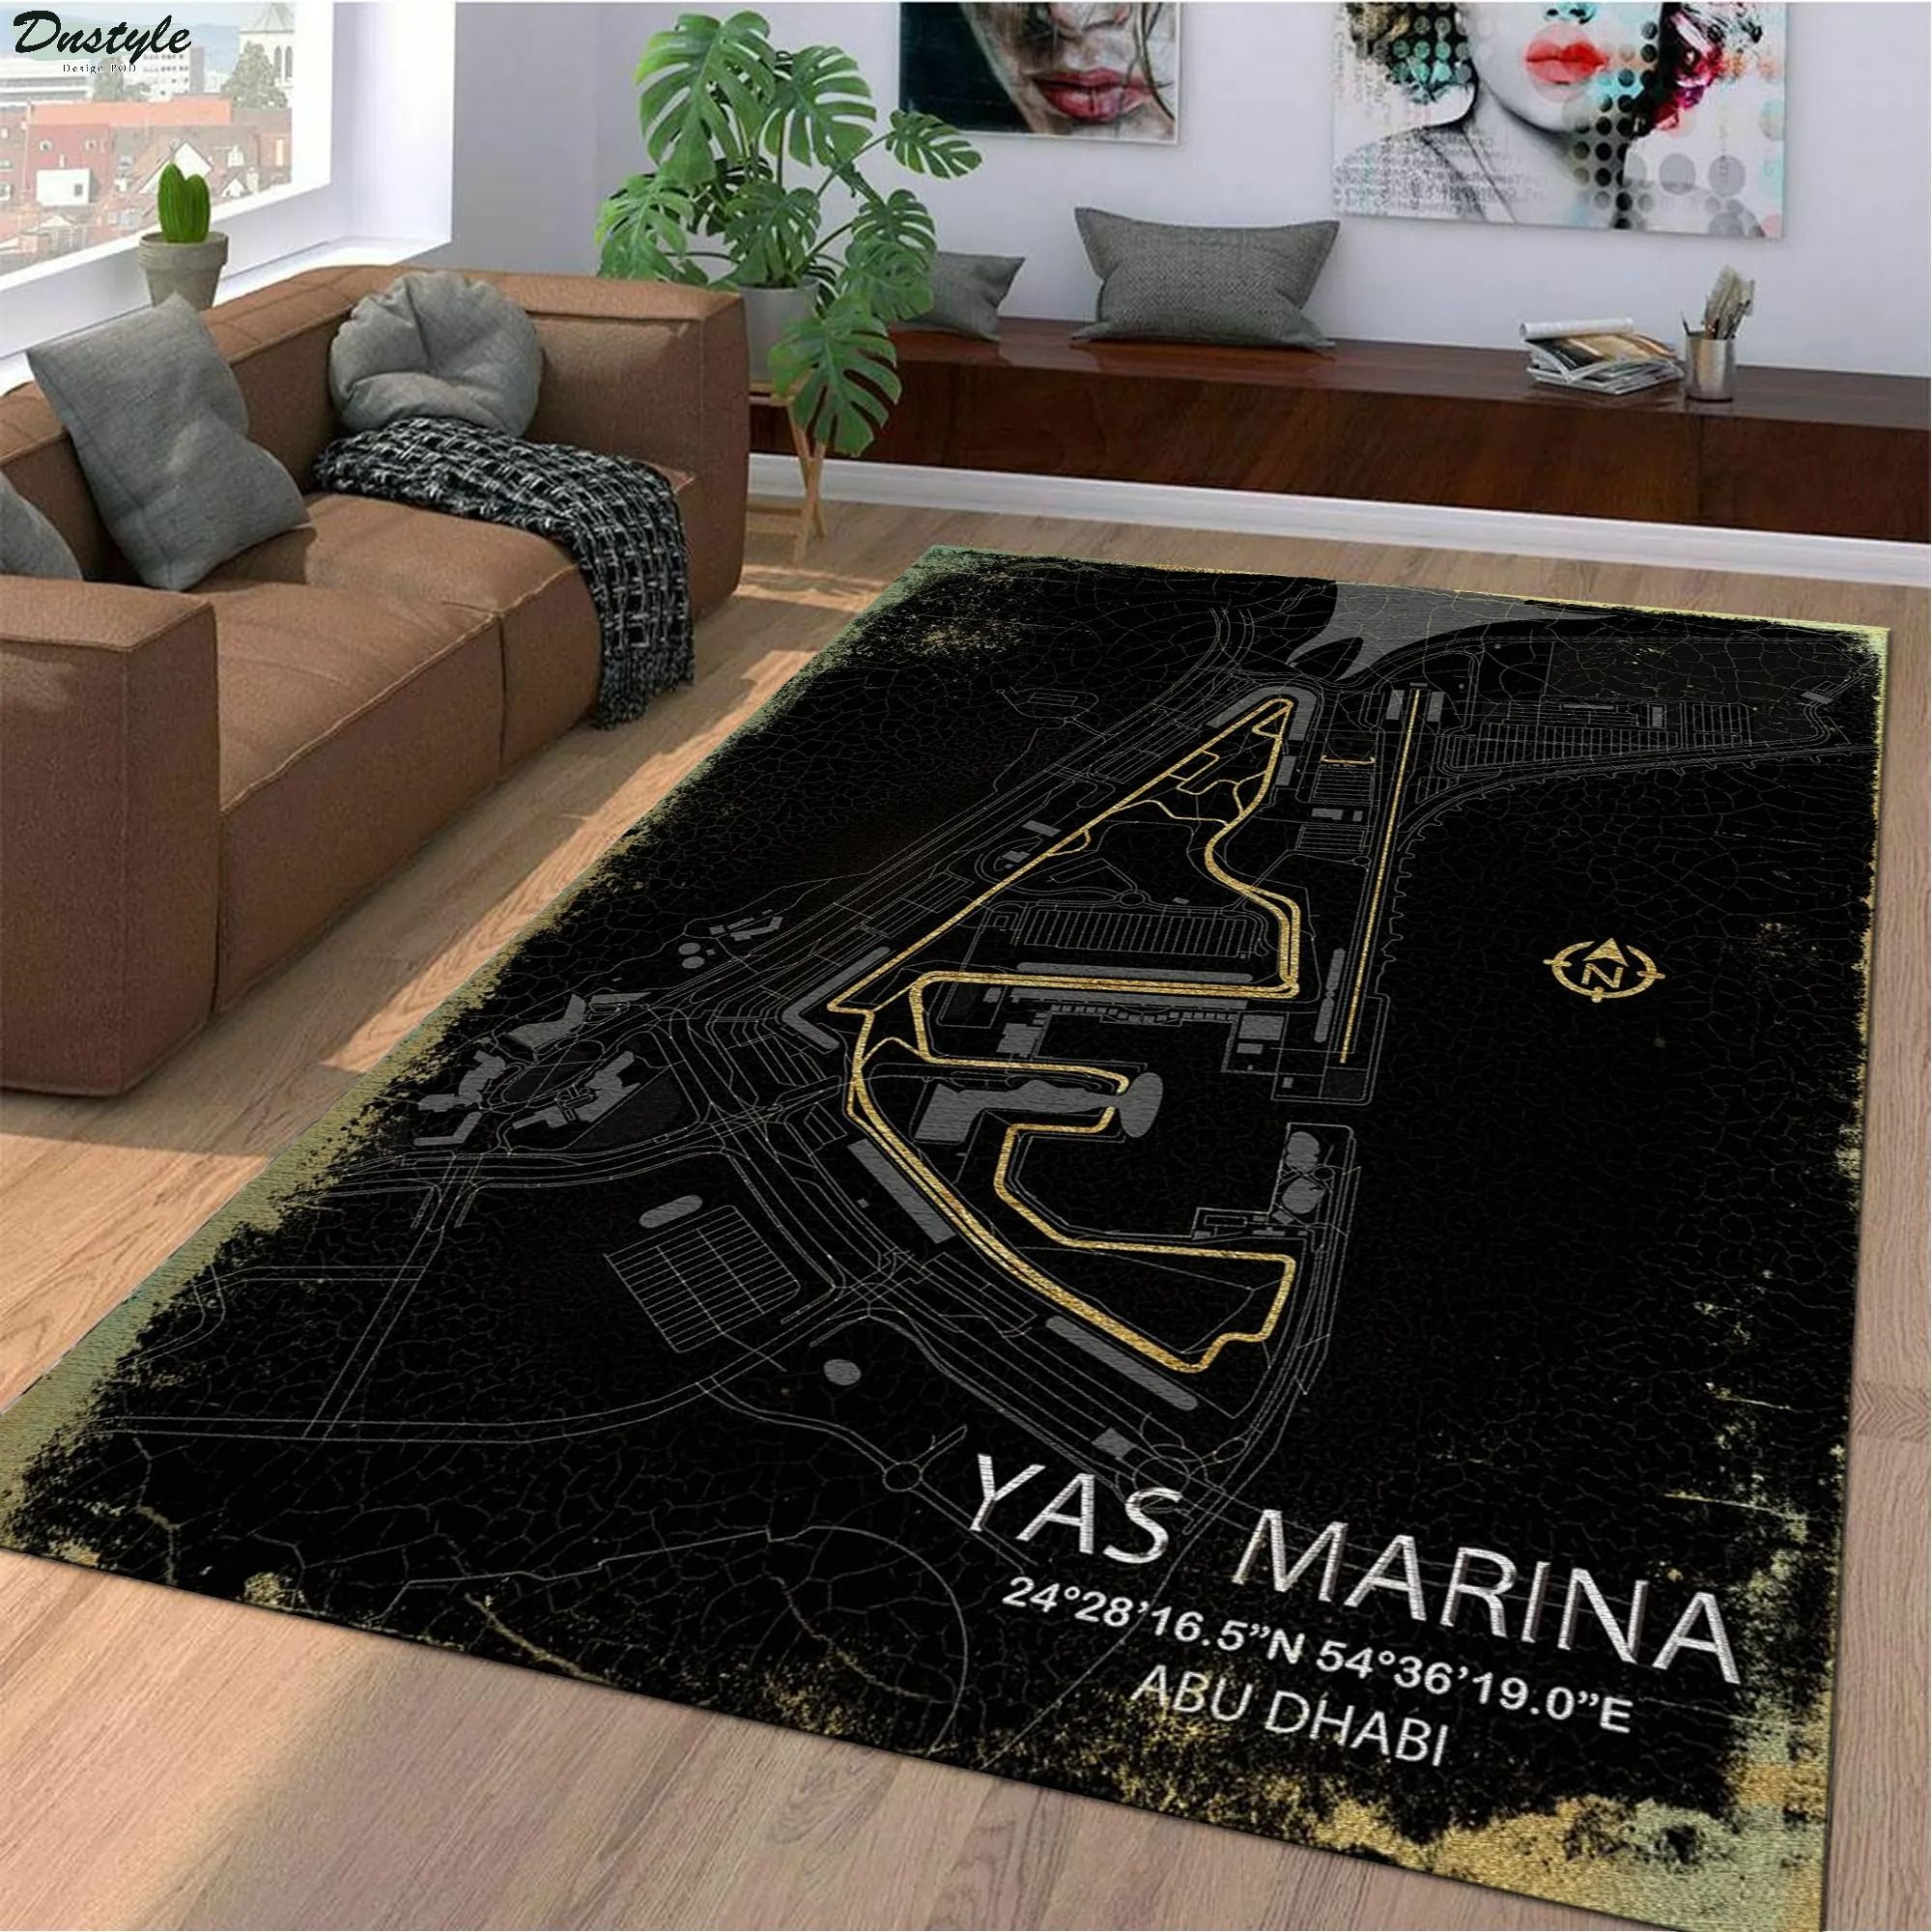 Yas marina f1 track rug